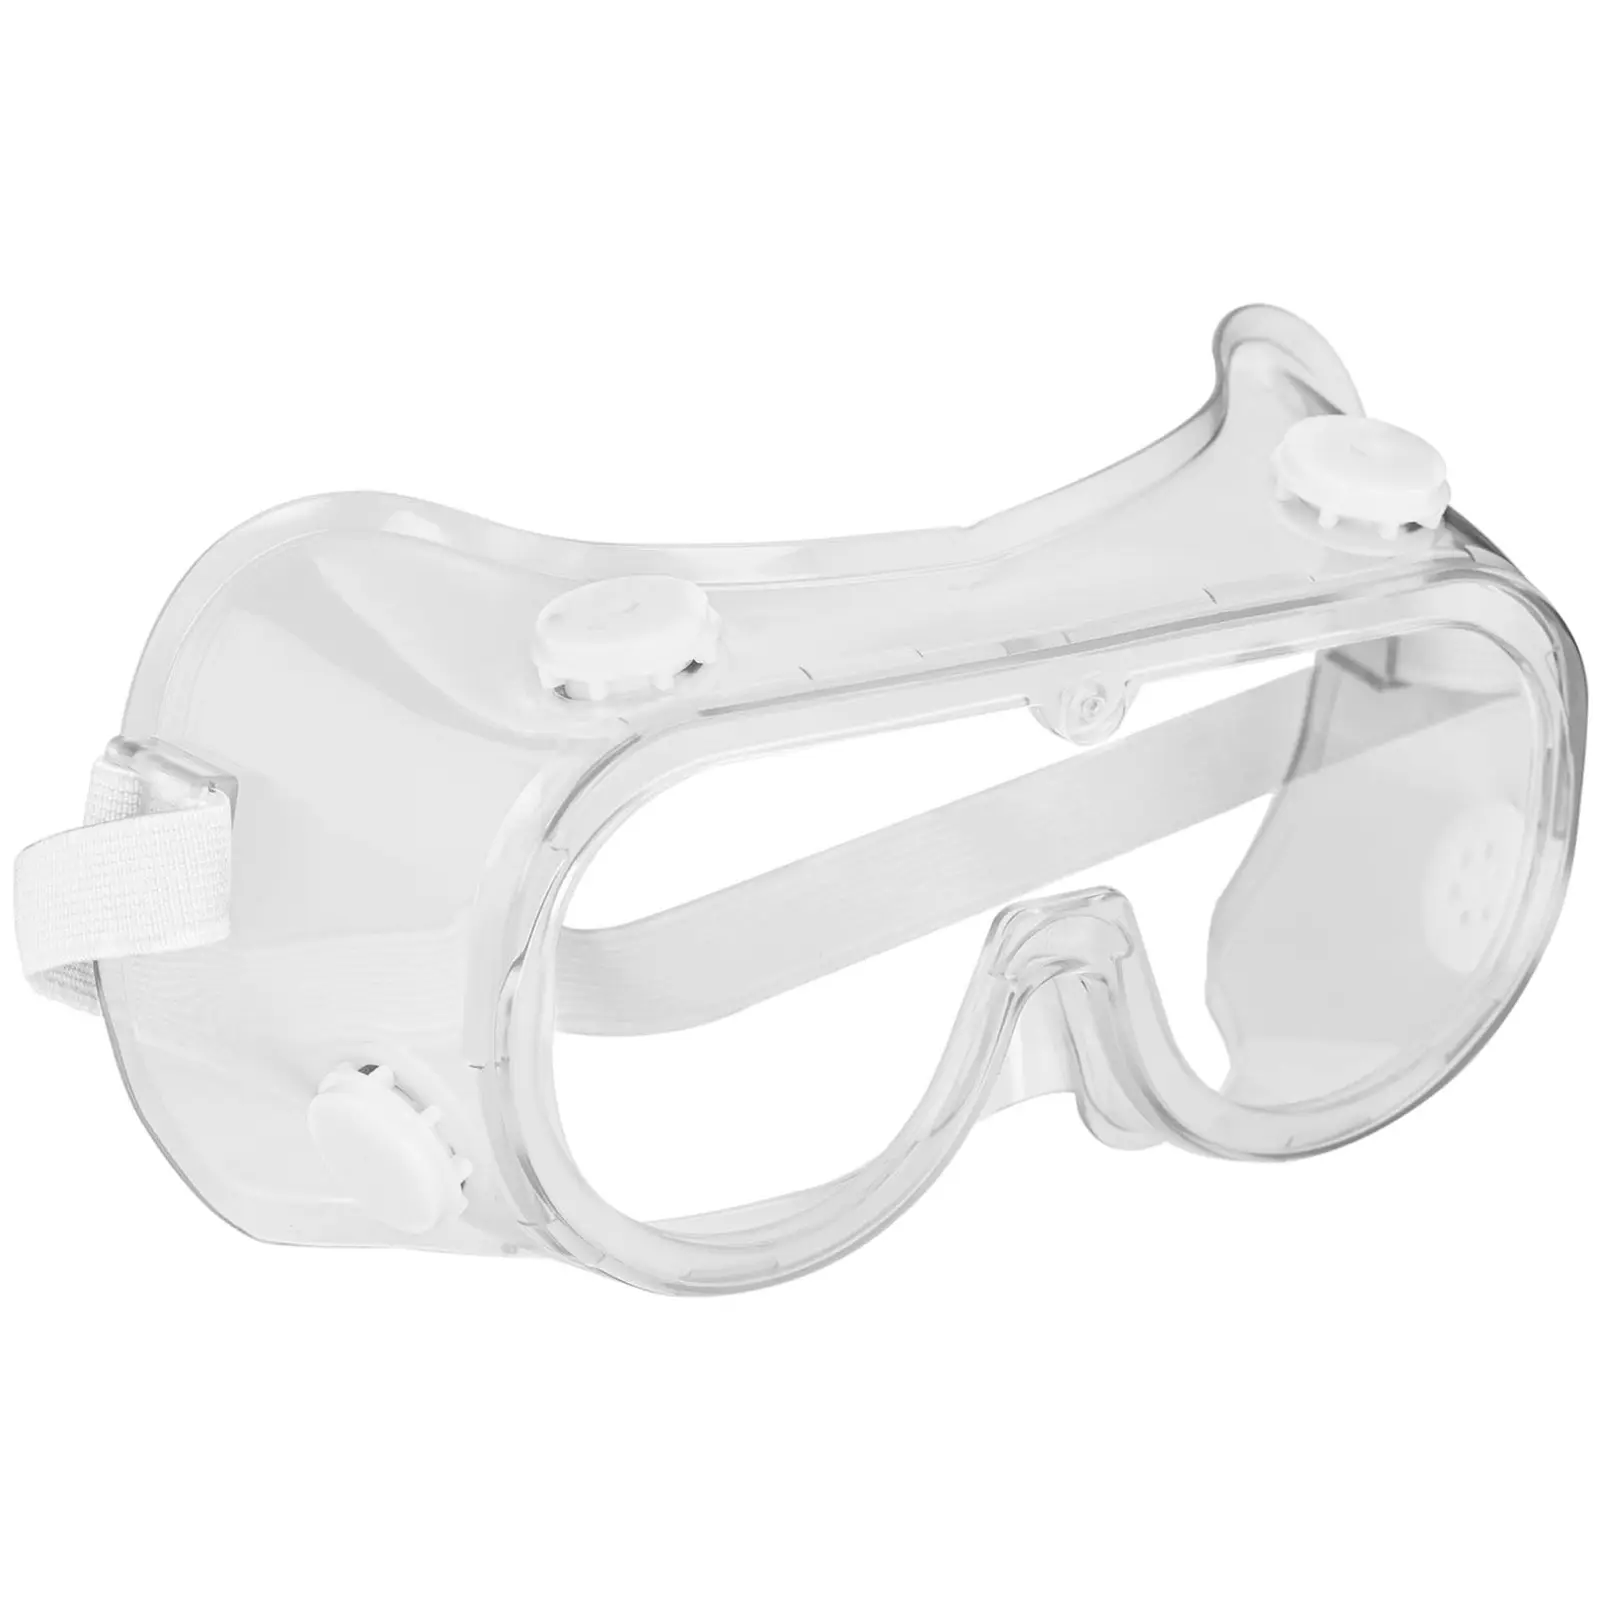 Gafas de seguridad - set de 3 - transparentes - talla única